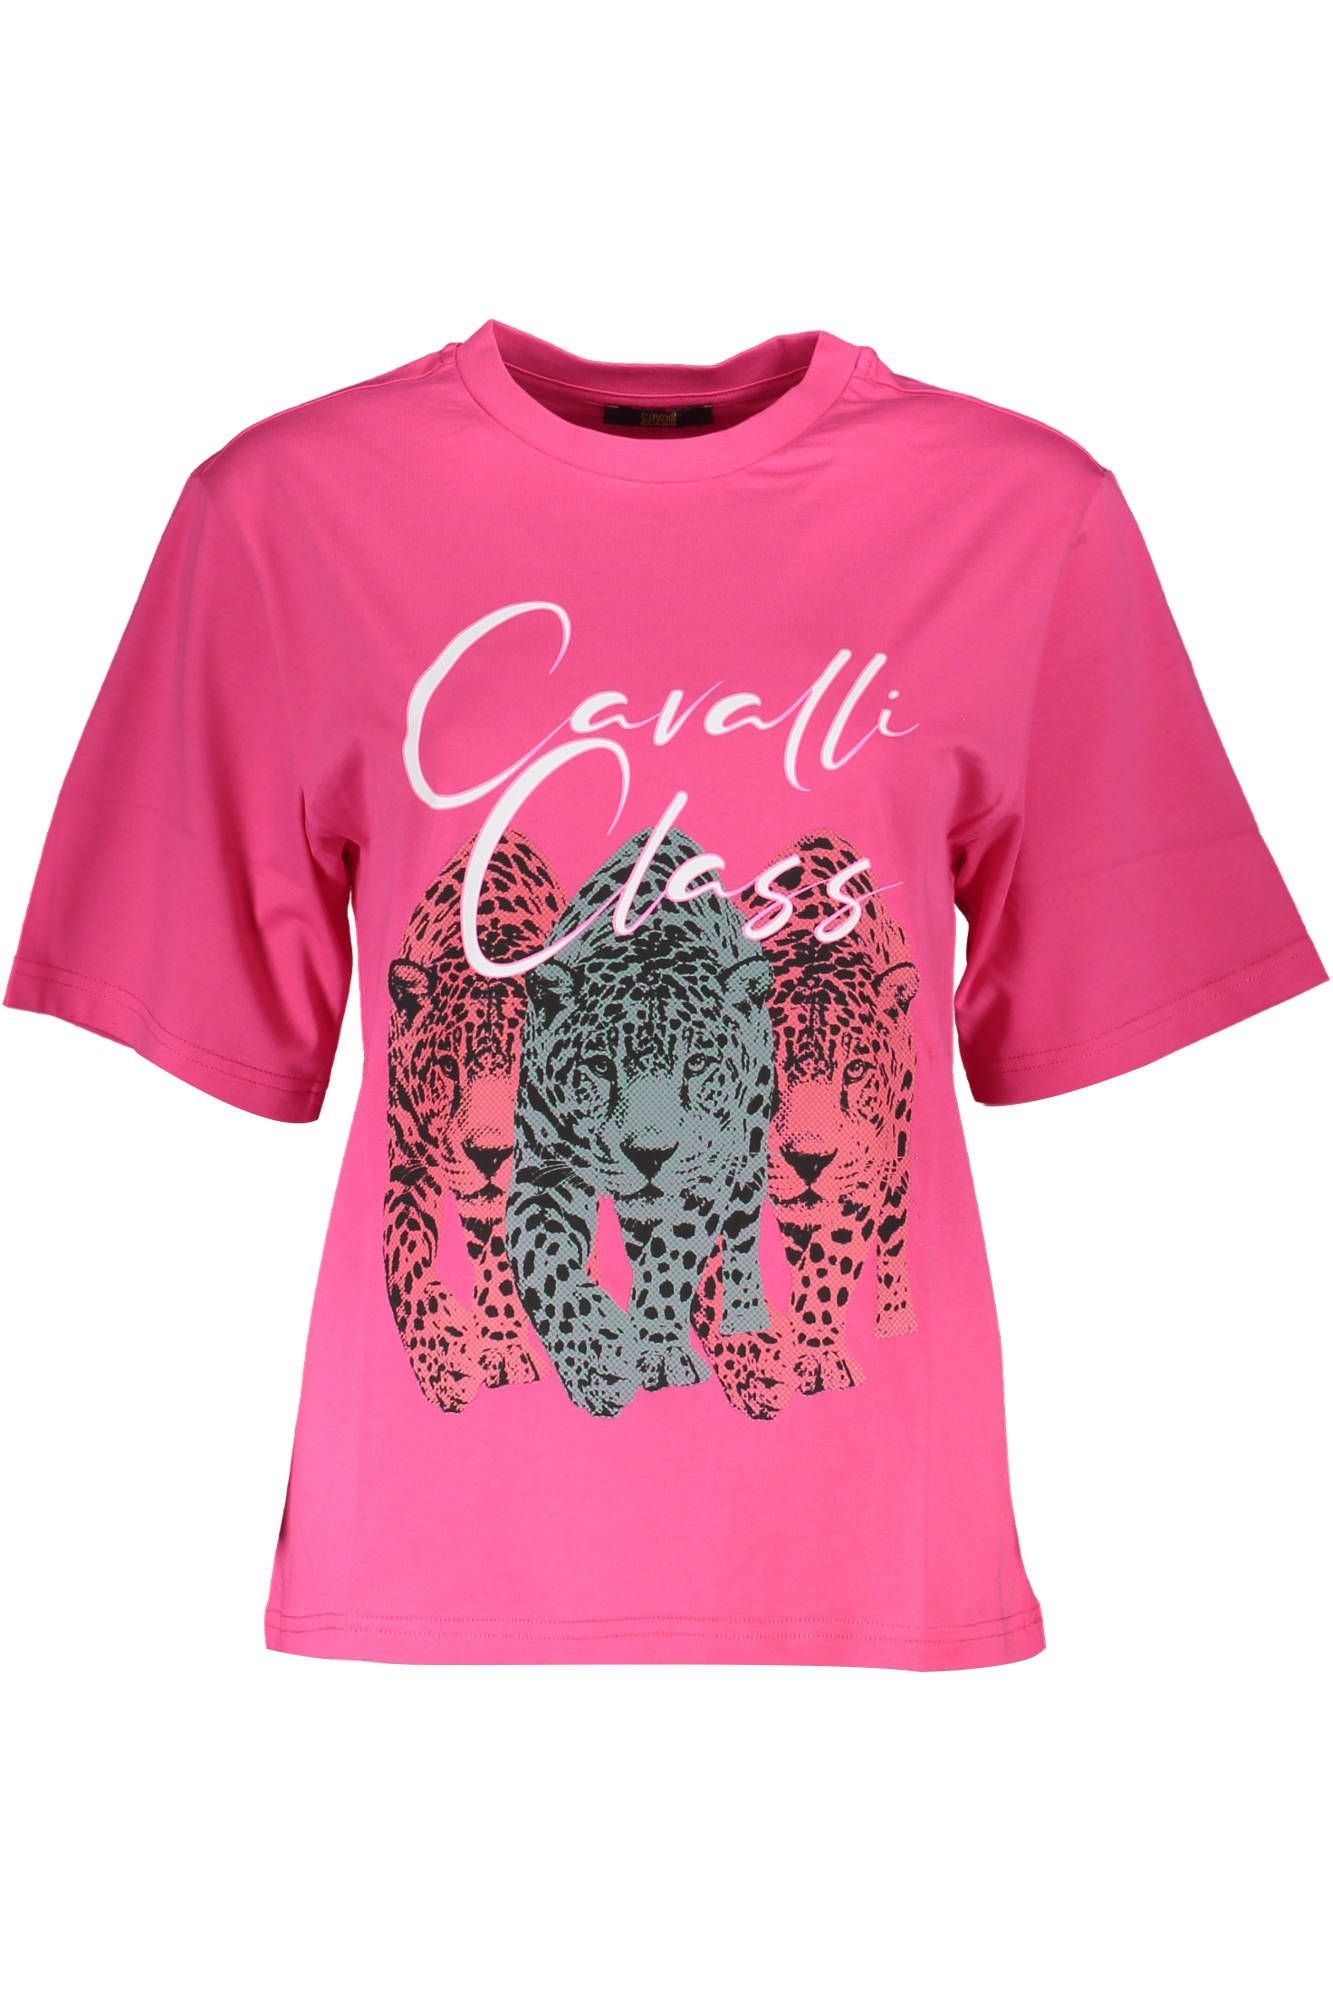 Cavalli Class Elegant Slim Fit Pink Tee with Chic Print